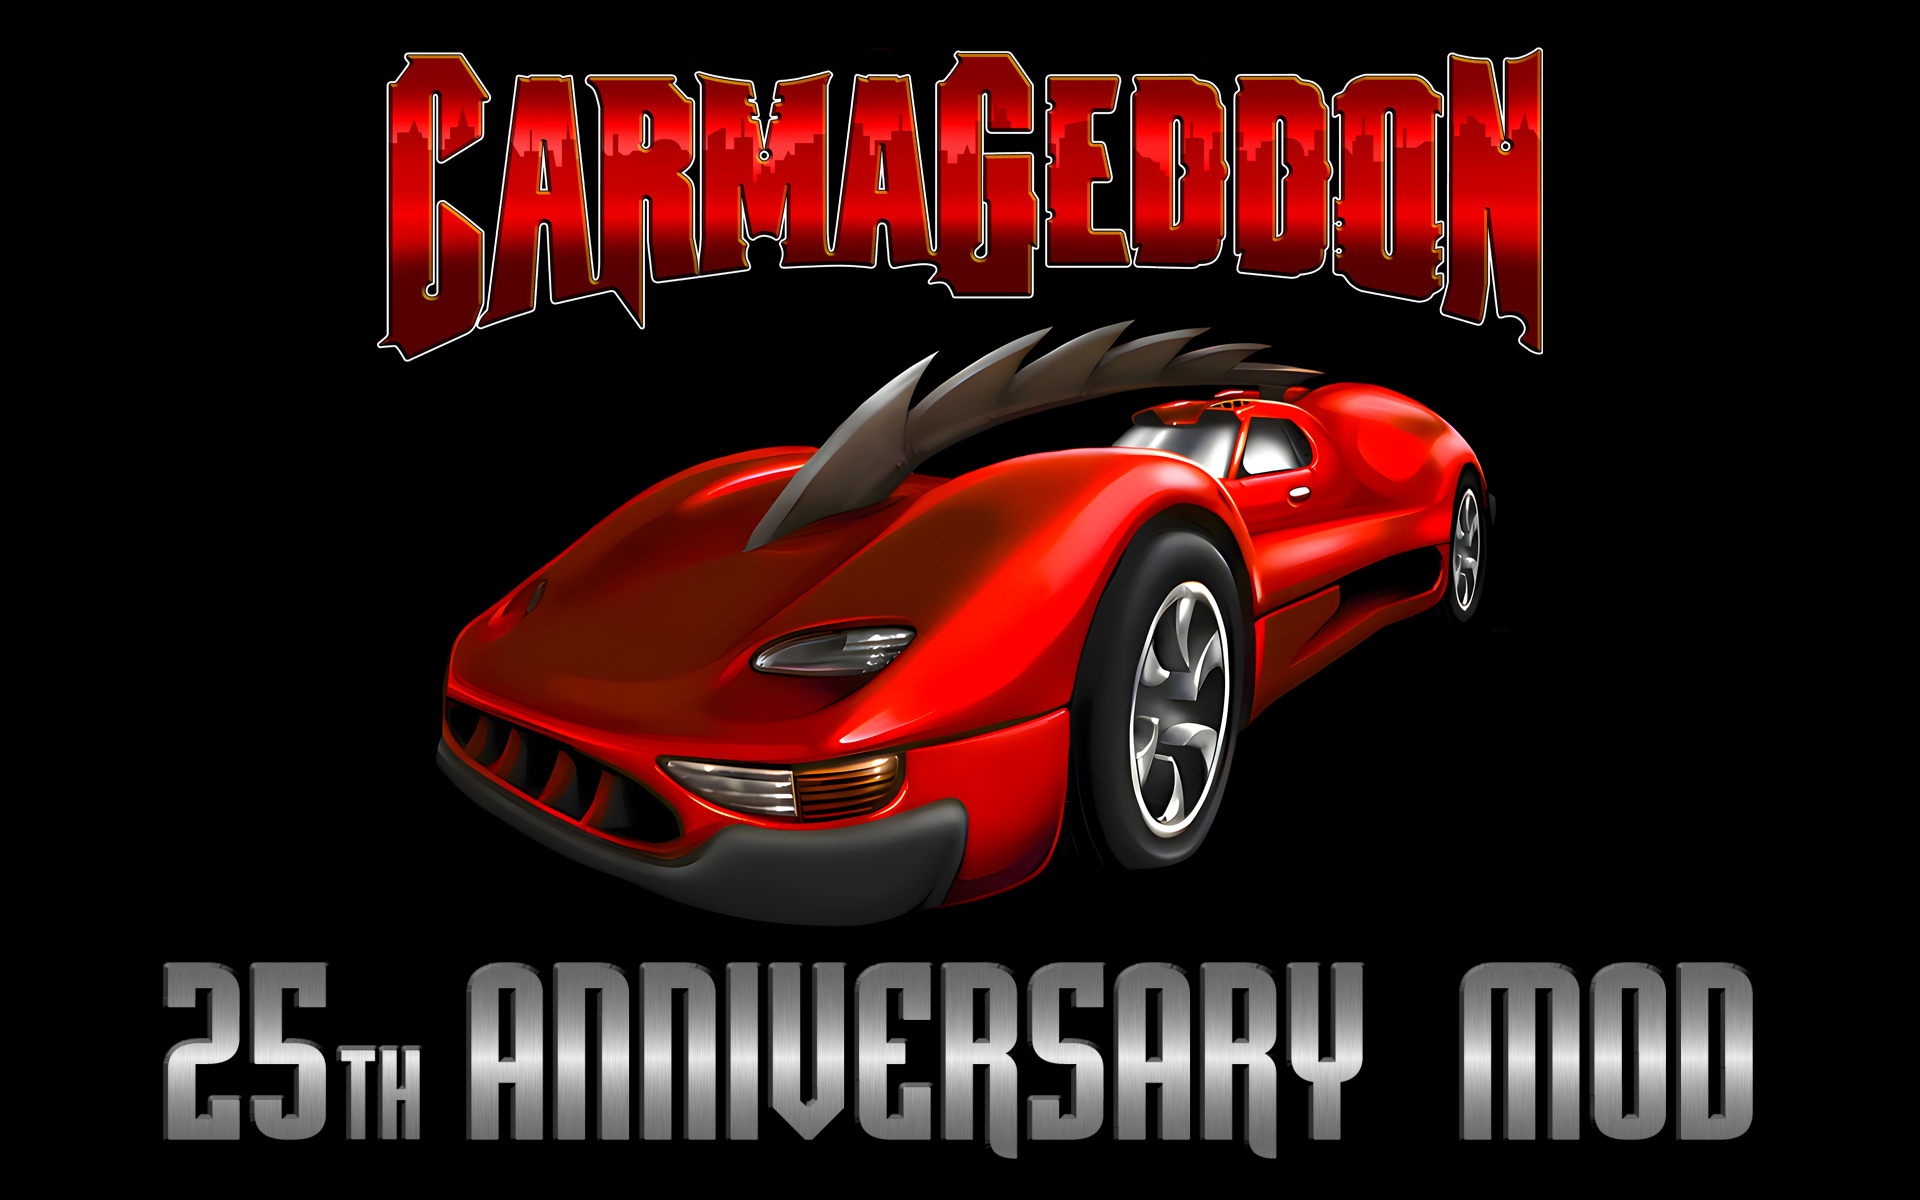 GTA V Carmageddon - PC Mod Files - Mod DB